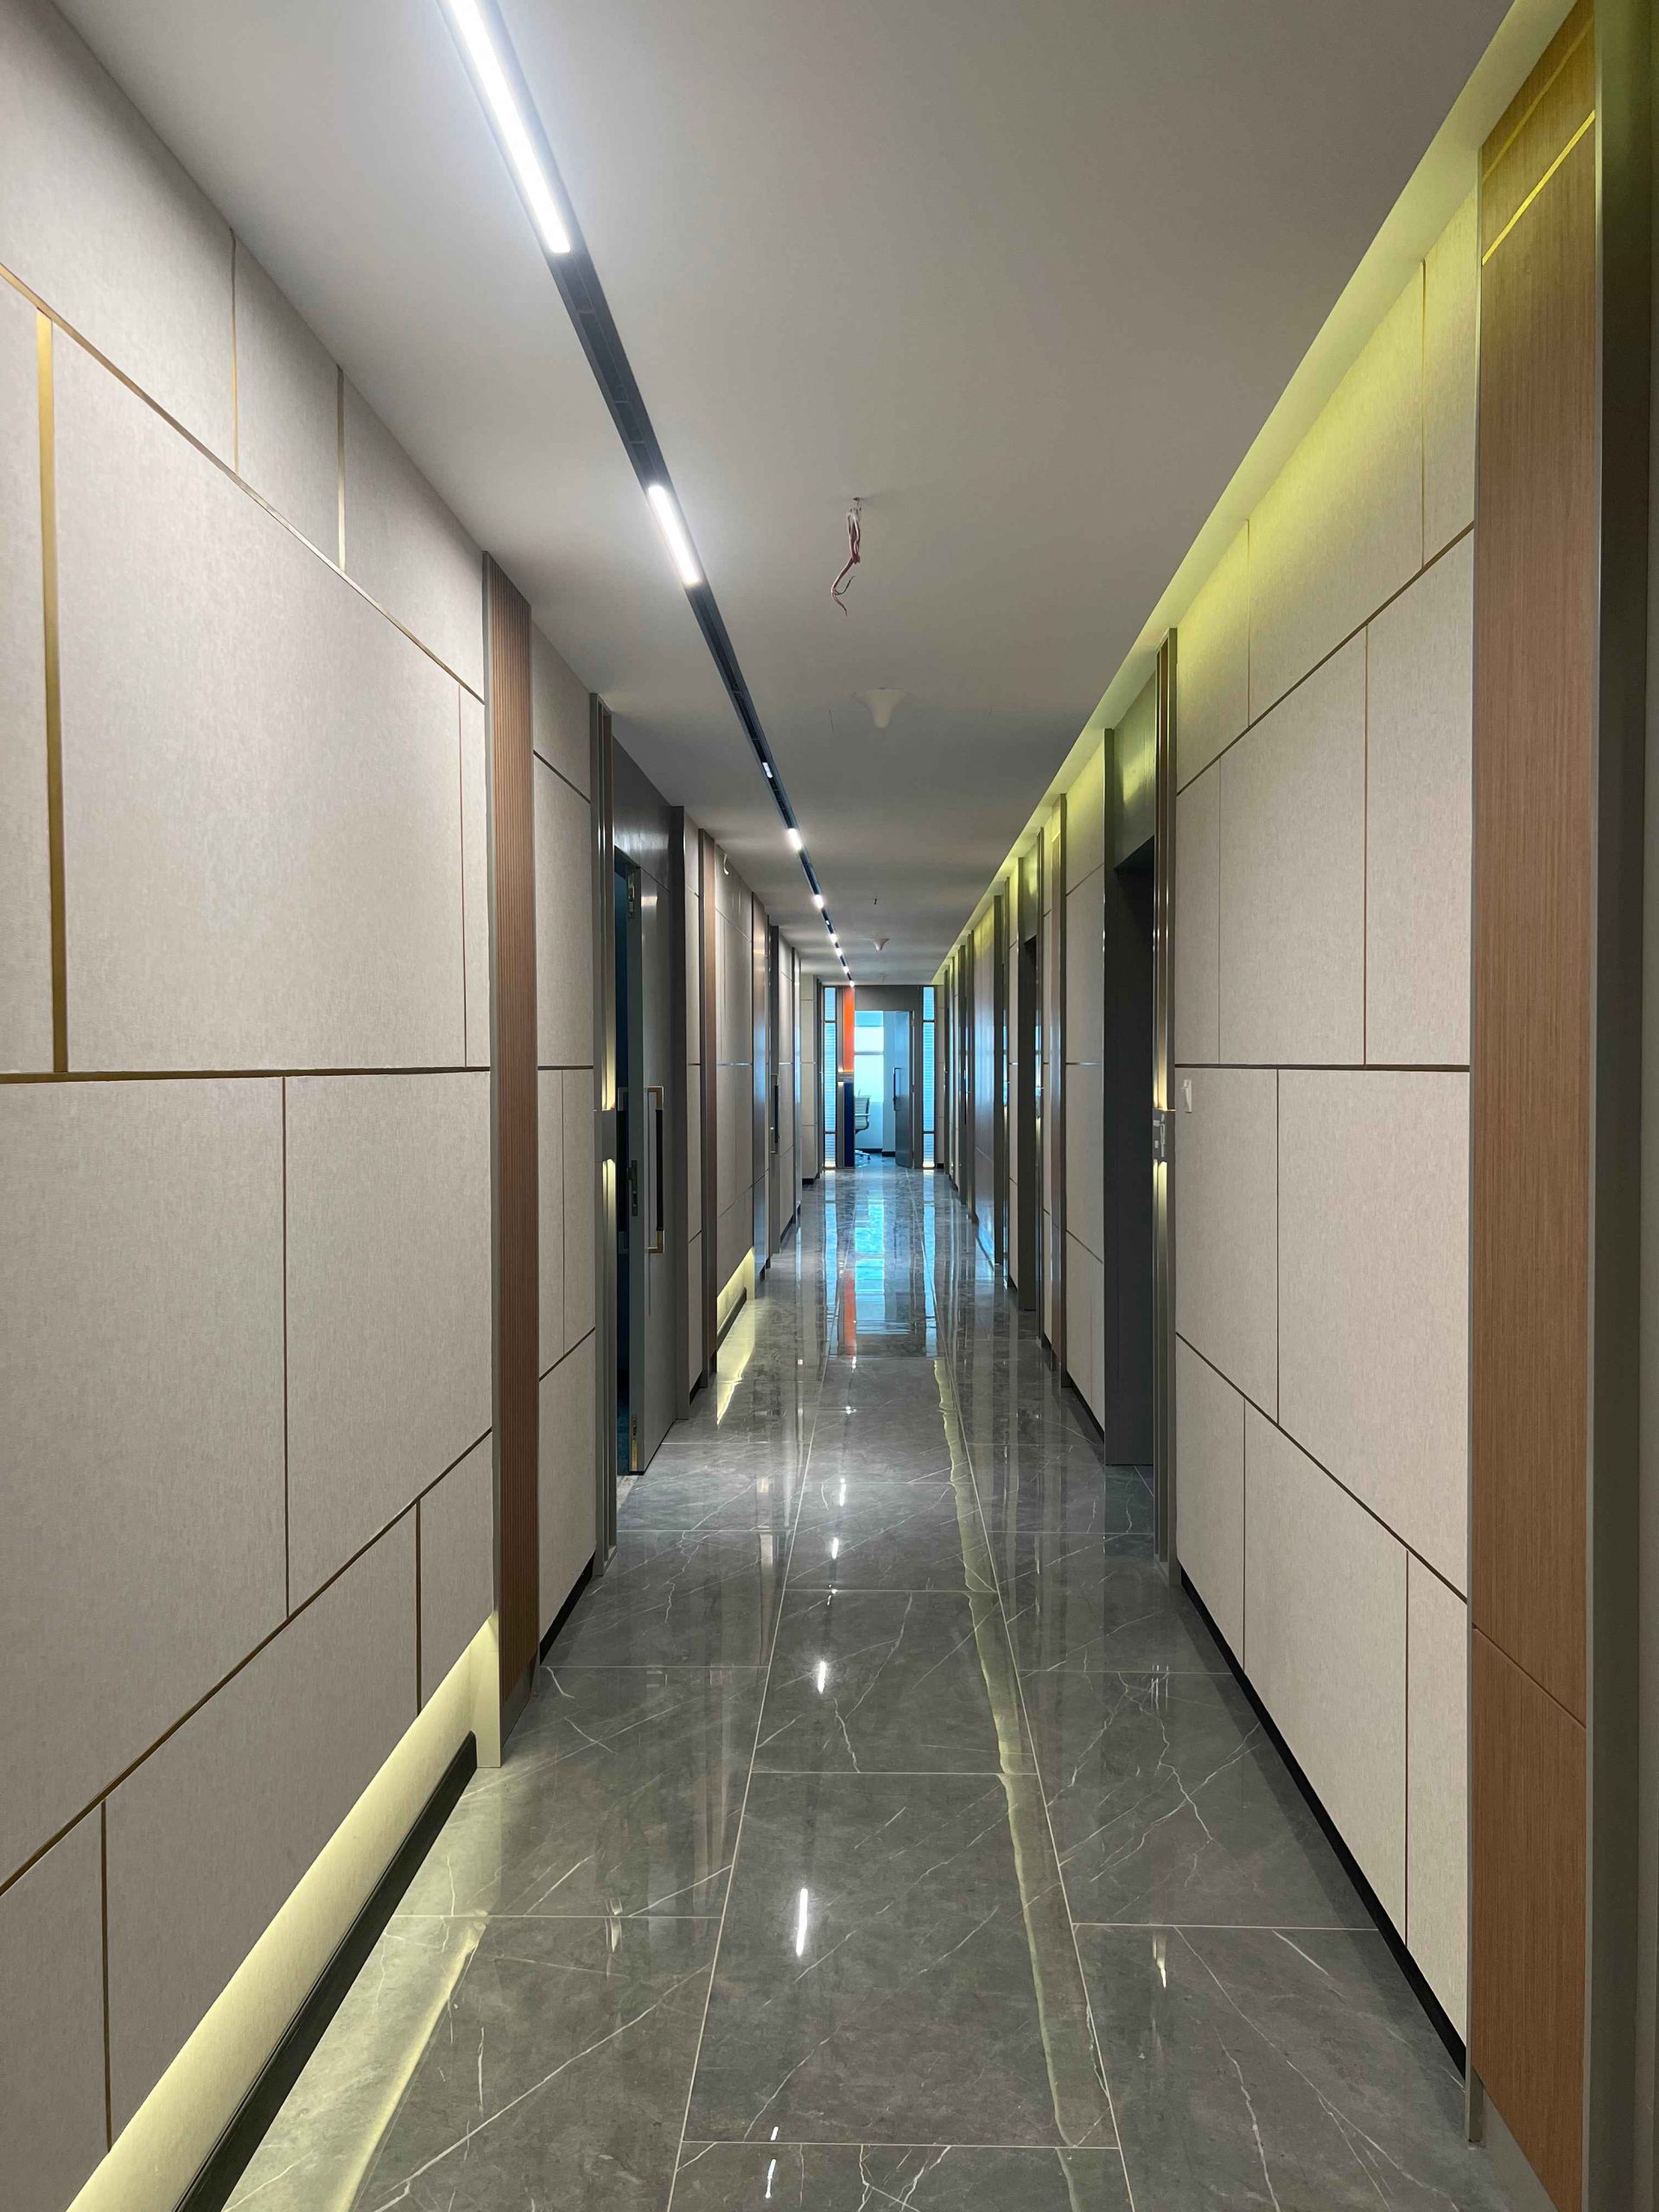 BANK INTERIOR DESIGN - Spazio Interior - Dubai